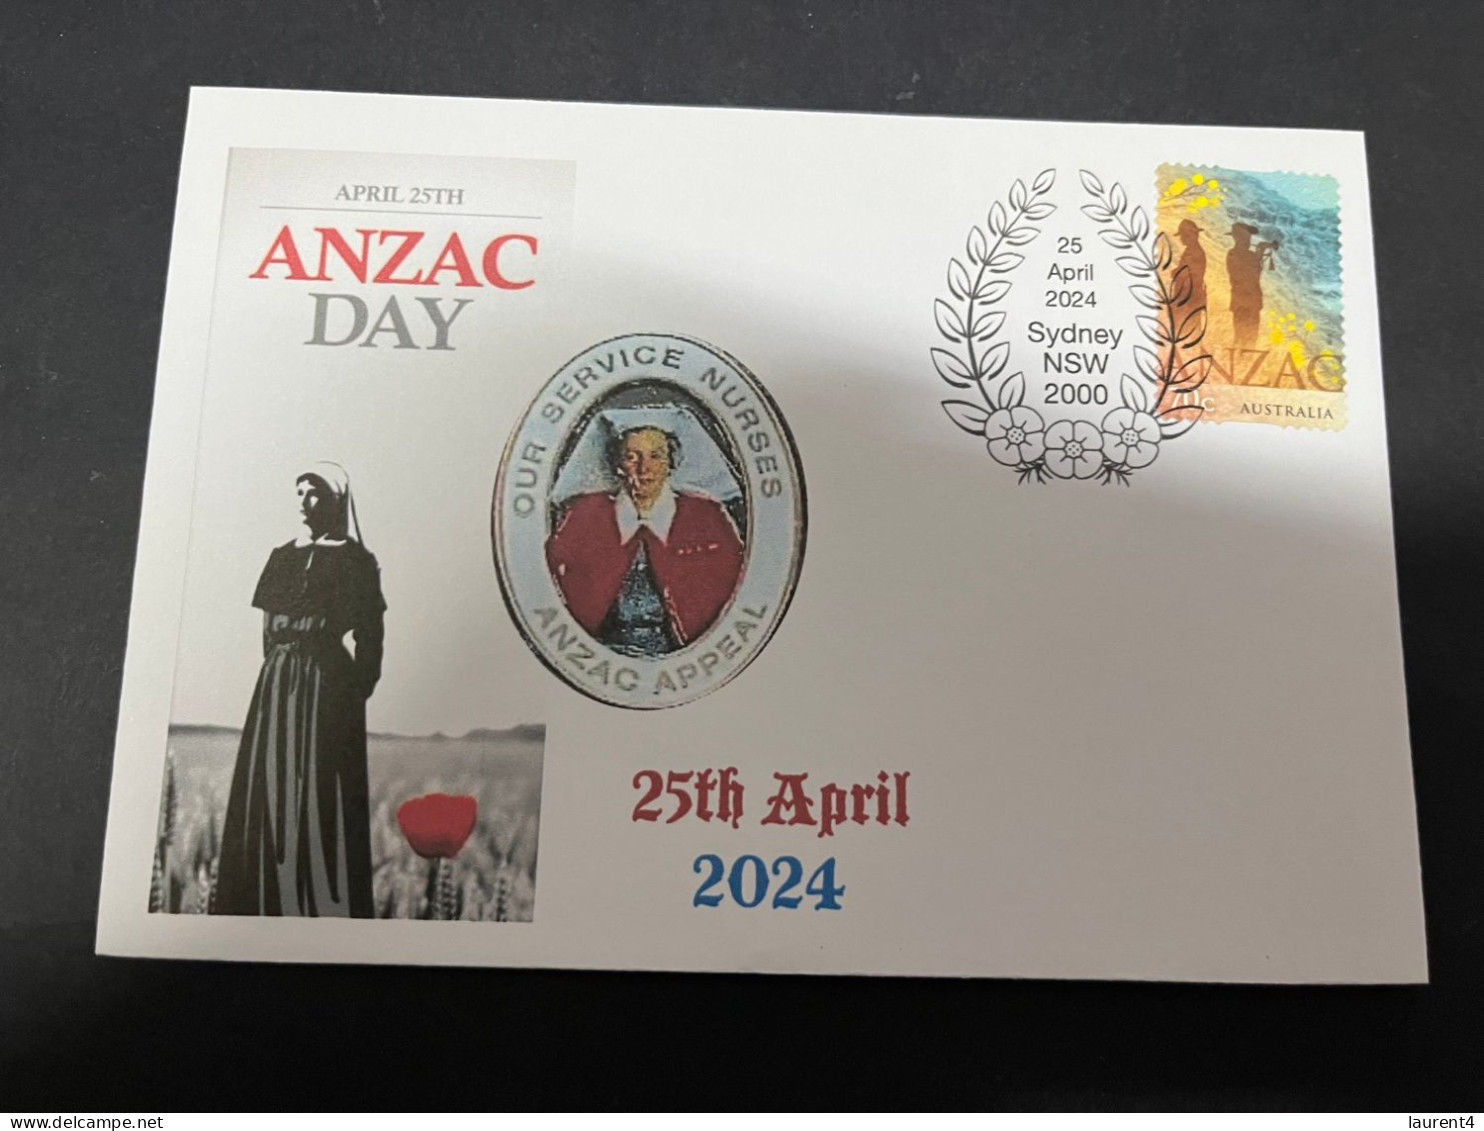 24-4-2024 (2 Z 52) Australia ANZAC 2024 - Special Cover Postmarked 25 April 2024 (Red Cross Nurse) - Militaria